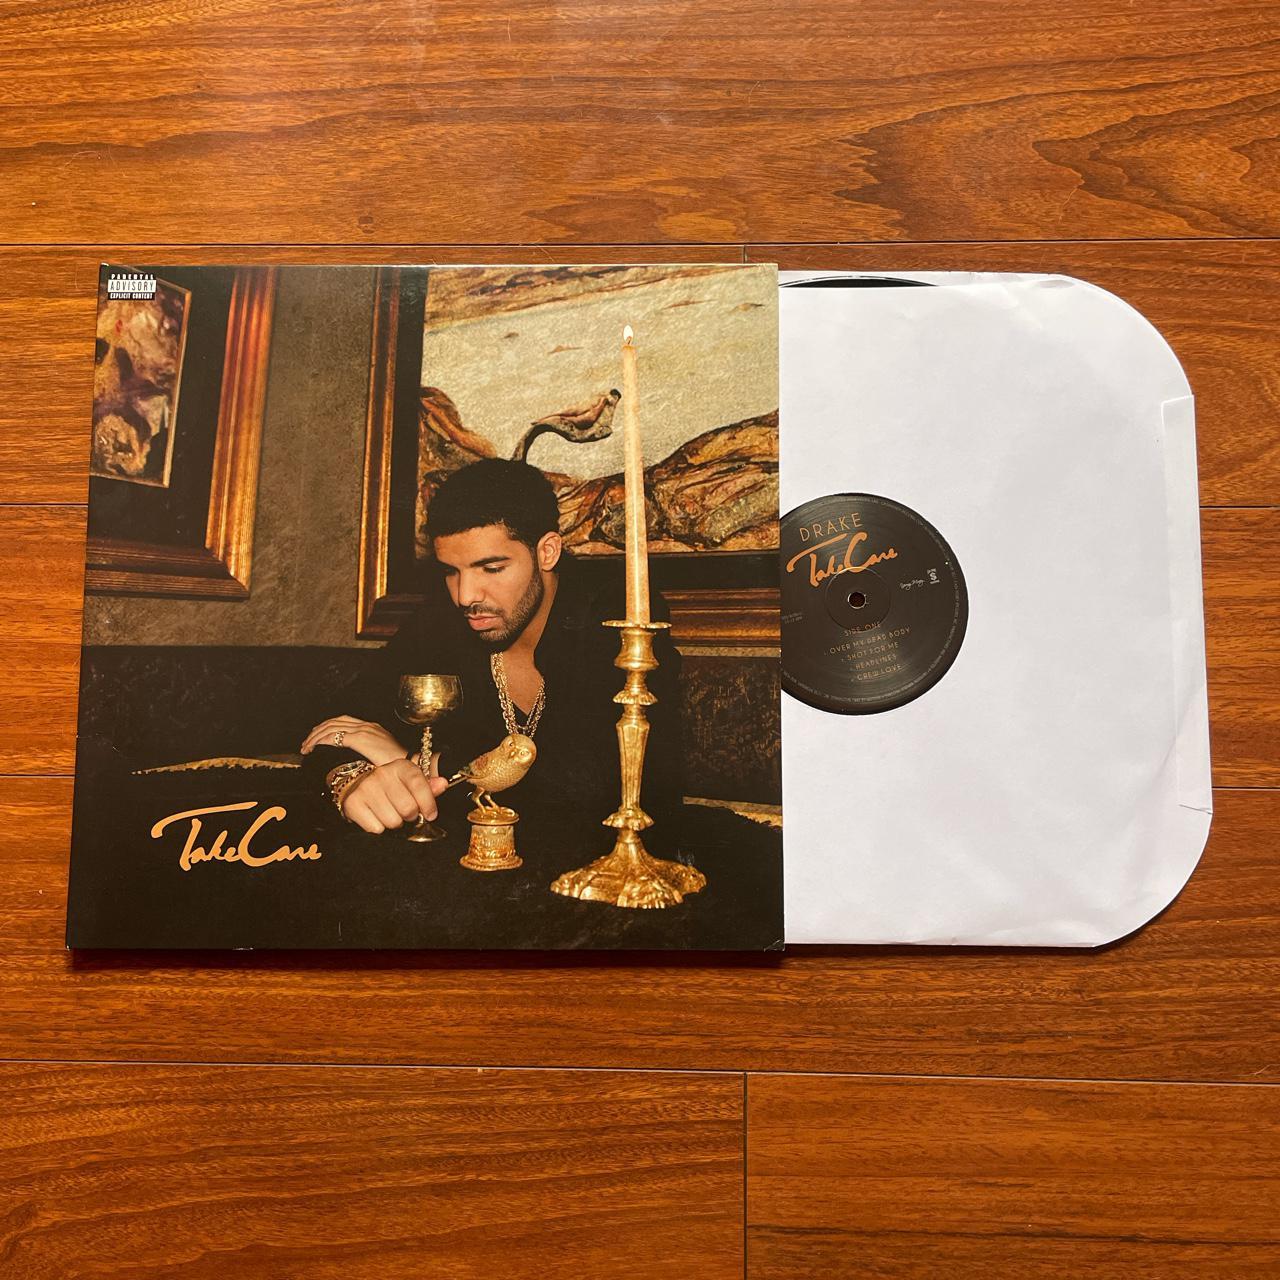 Product Image 4 - Drake Vinyl Record
Take Care Album
2